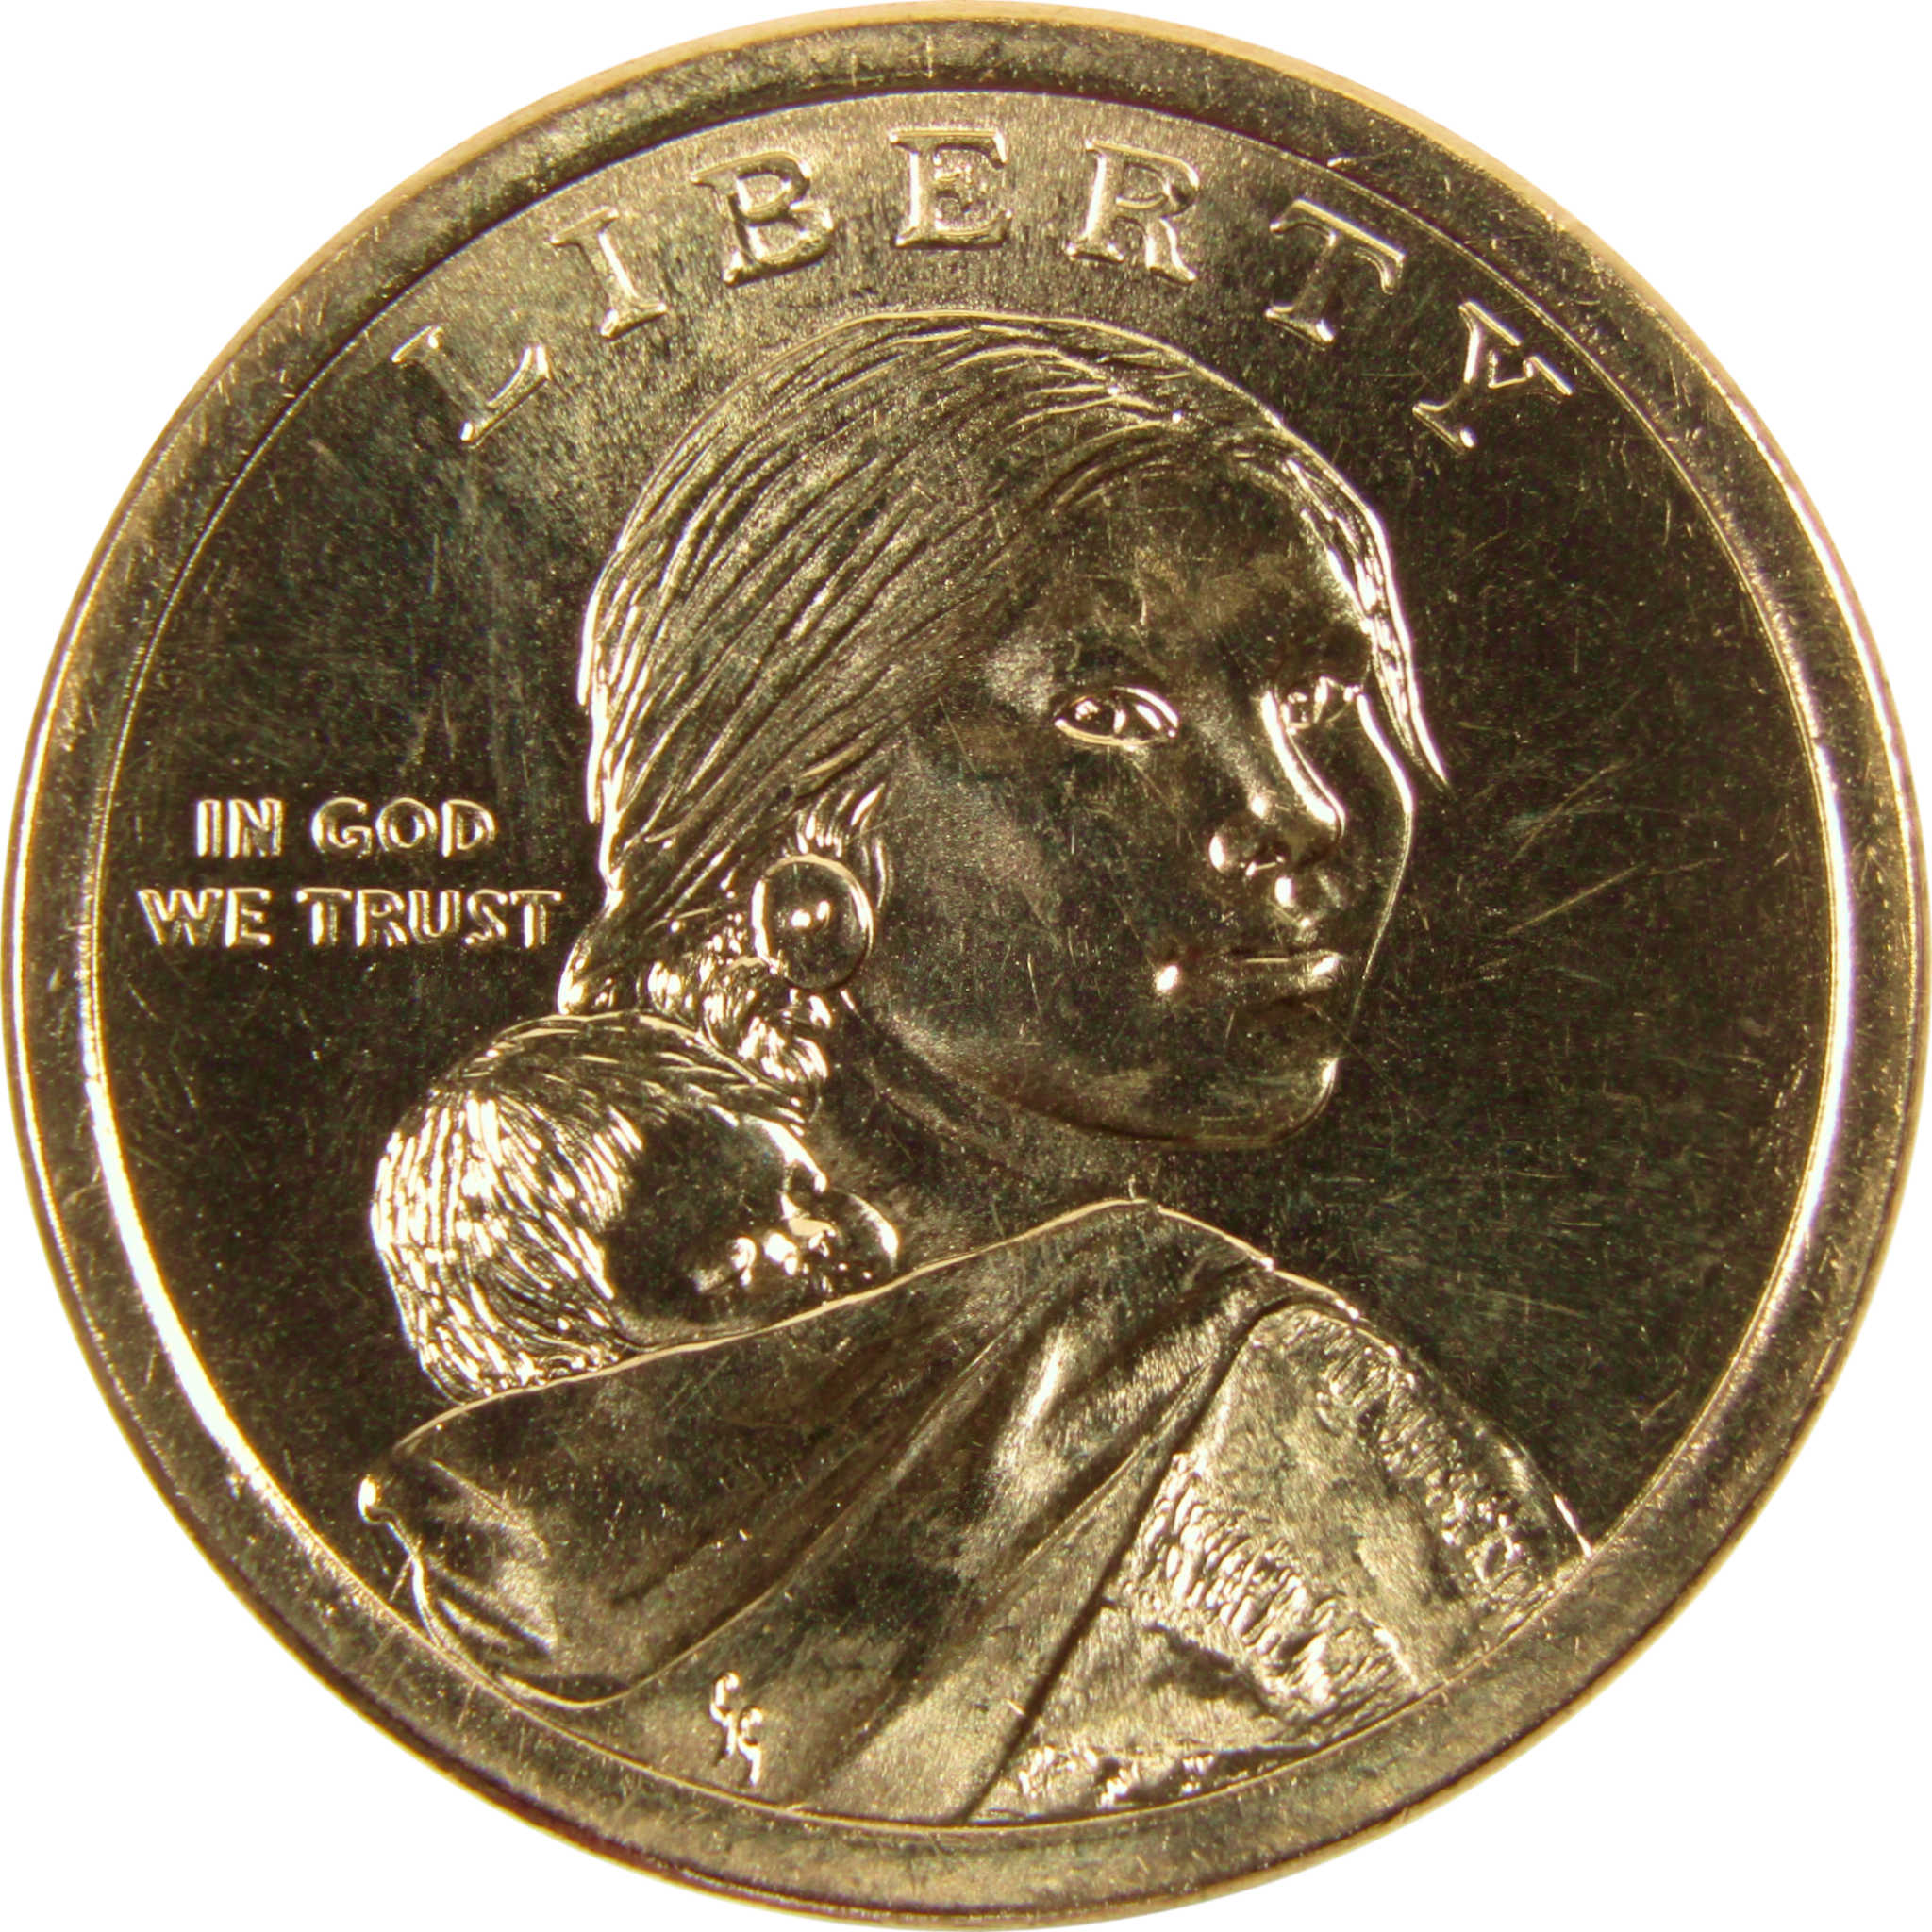 2018 D Jim Thorpe Native American Dollar BU Uncirculated $1 Coin